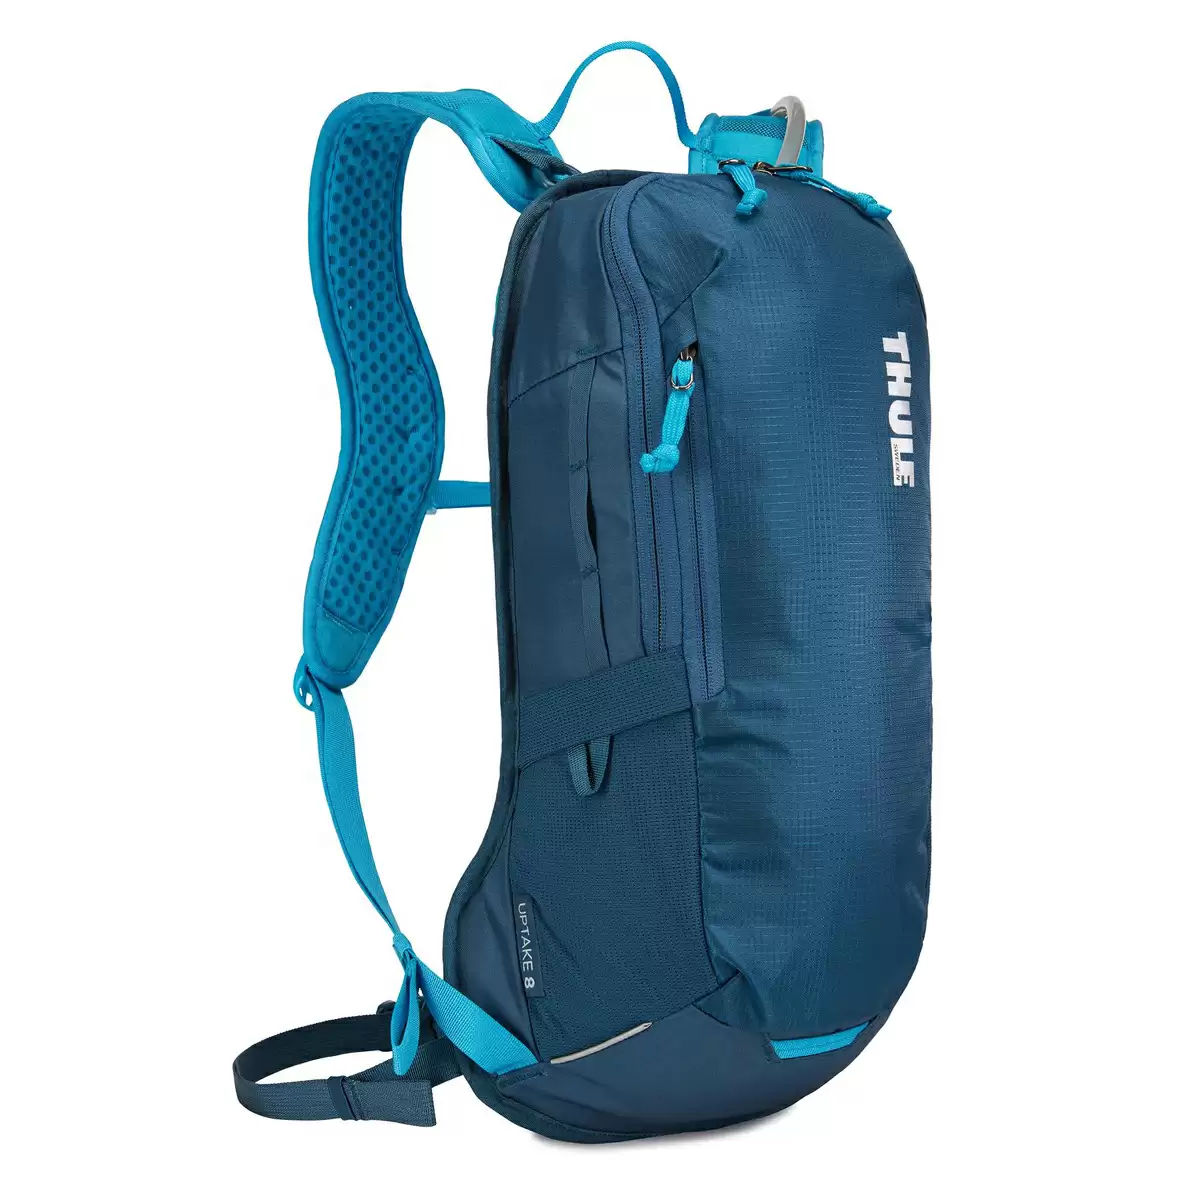 Water backpack UpTake 8L blue - image